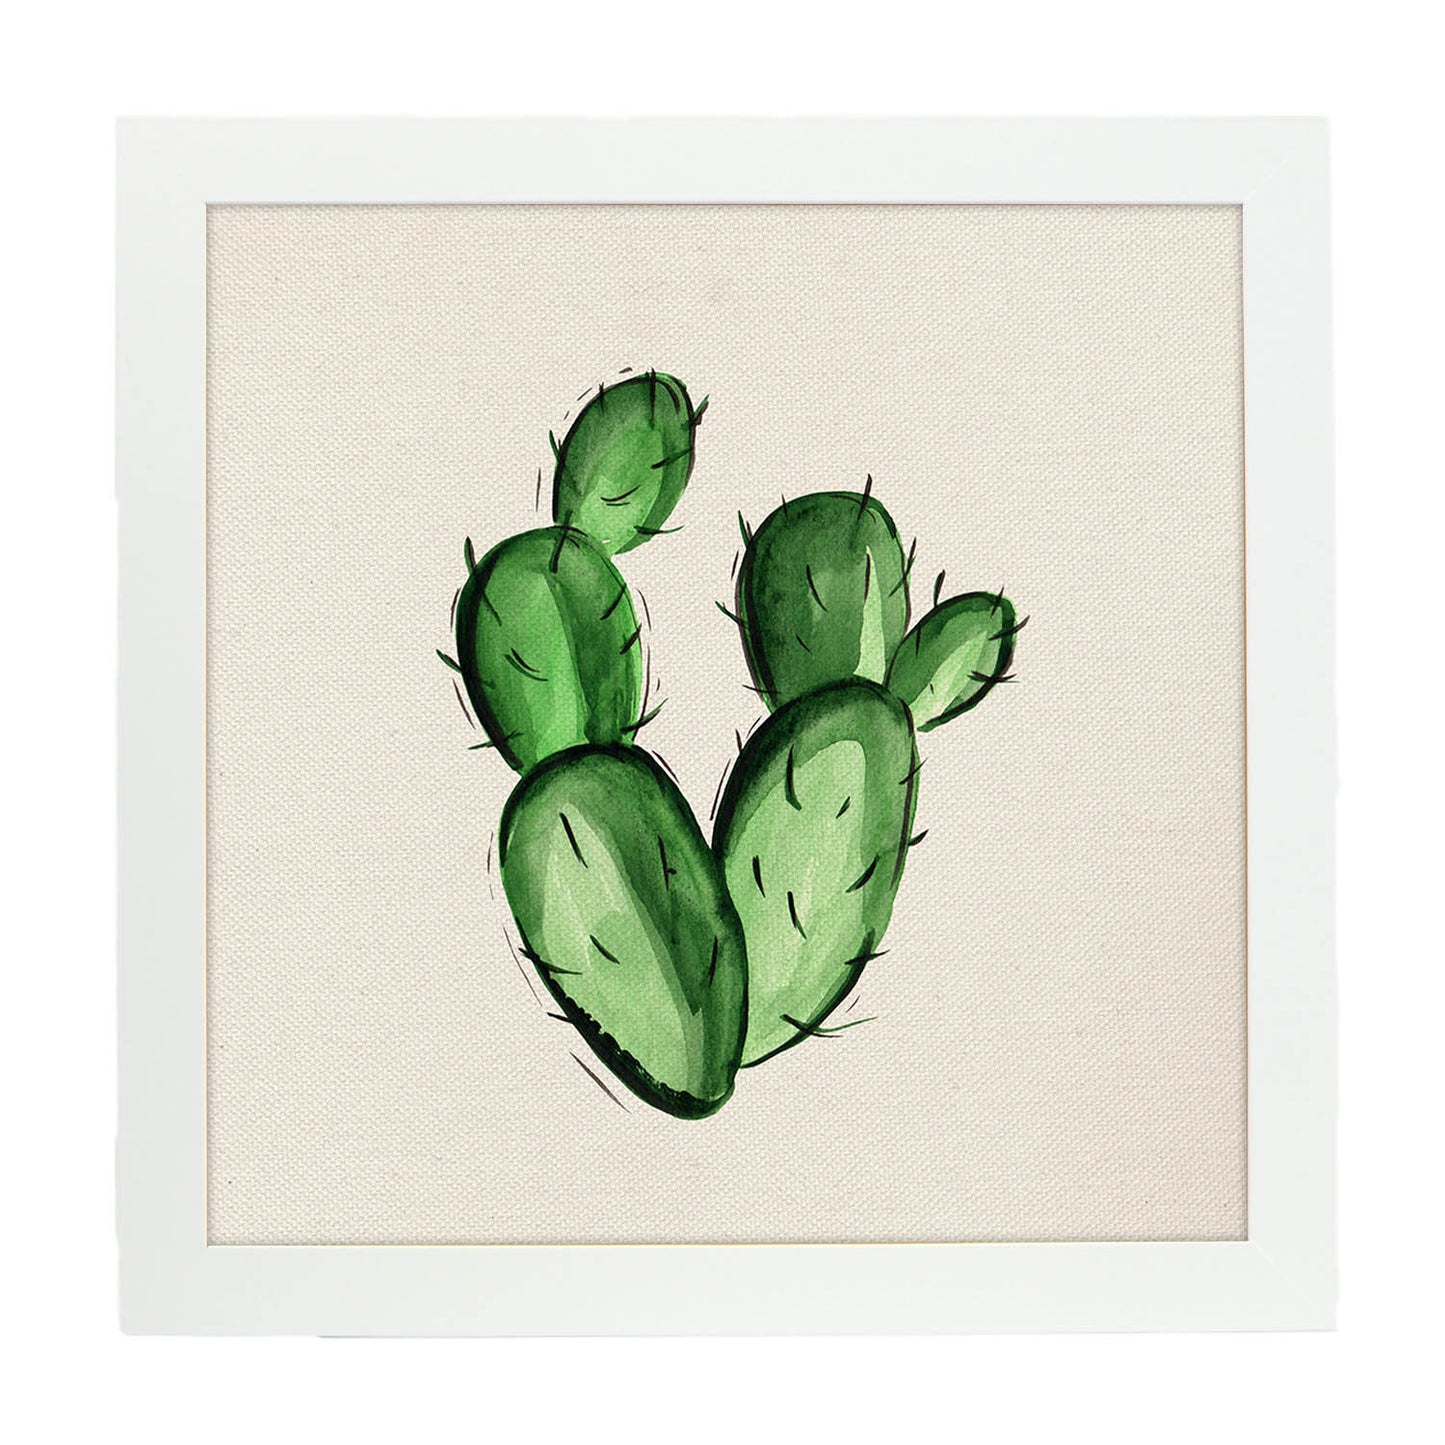 Poster de cactus dibujado. Lámina de Todo pasión-Artwork-Nacnic-20x20 cm-Marco Blanco-Nacnic Estudio SL